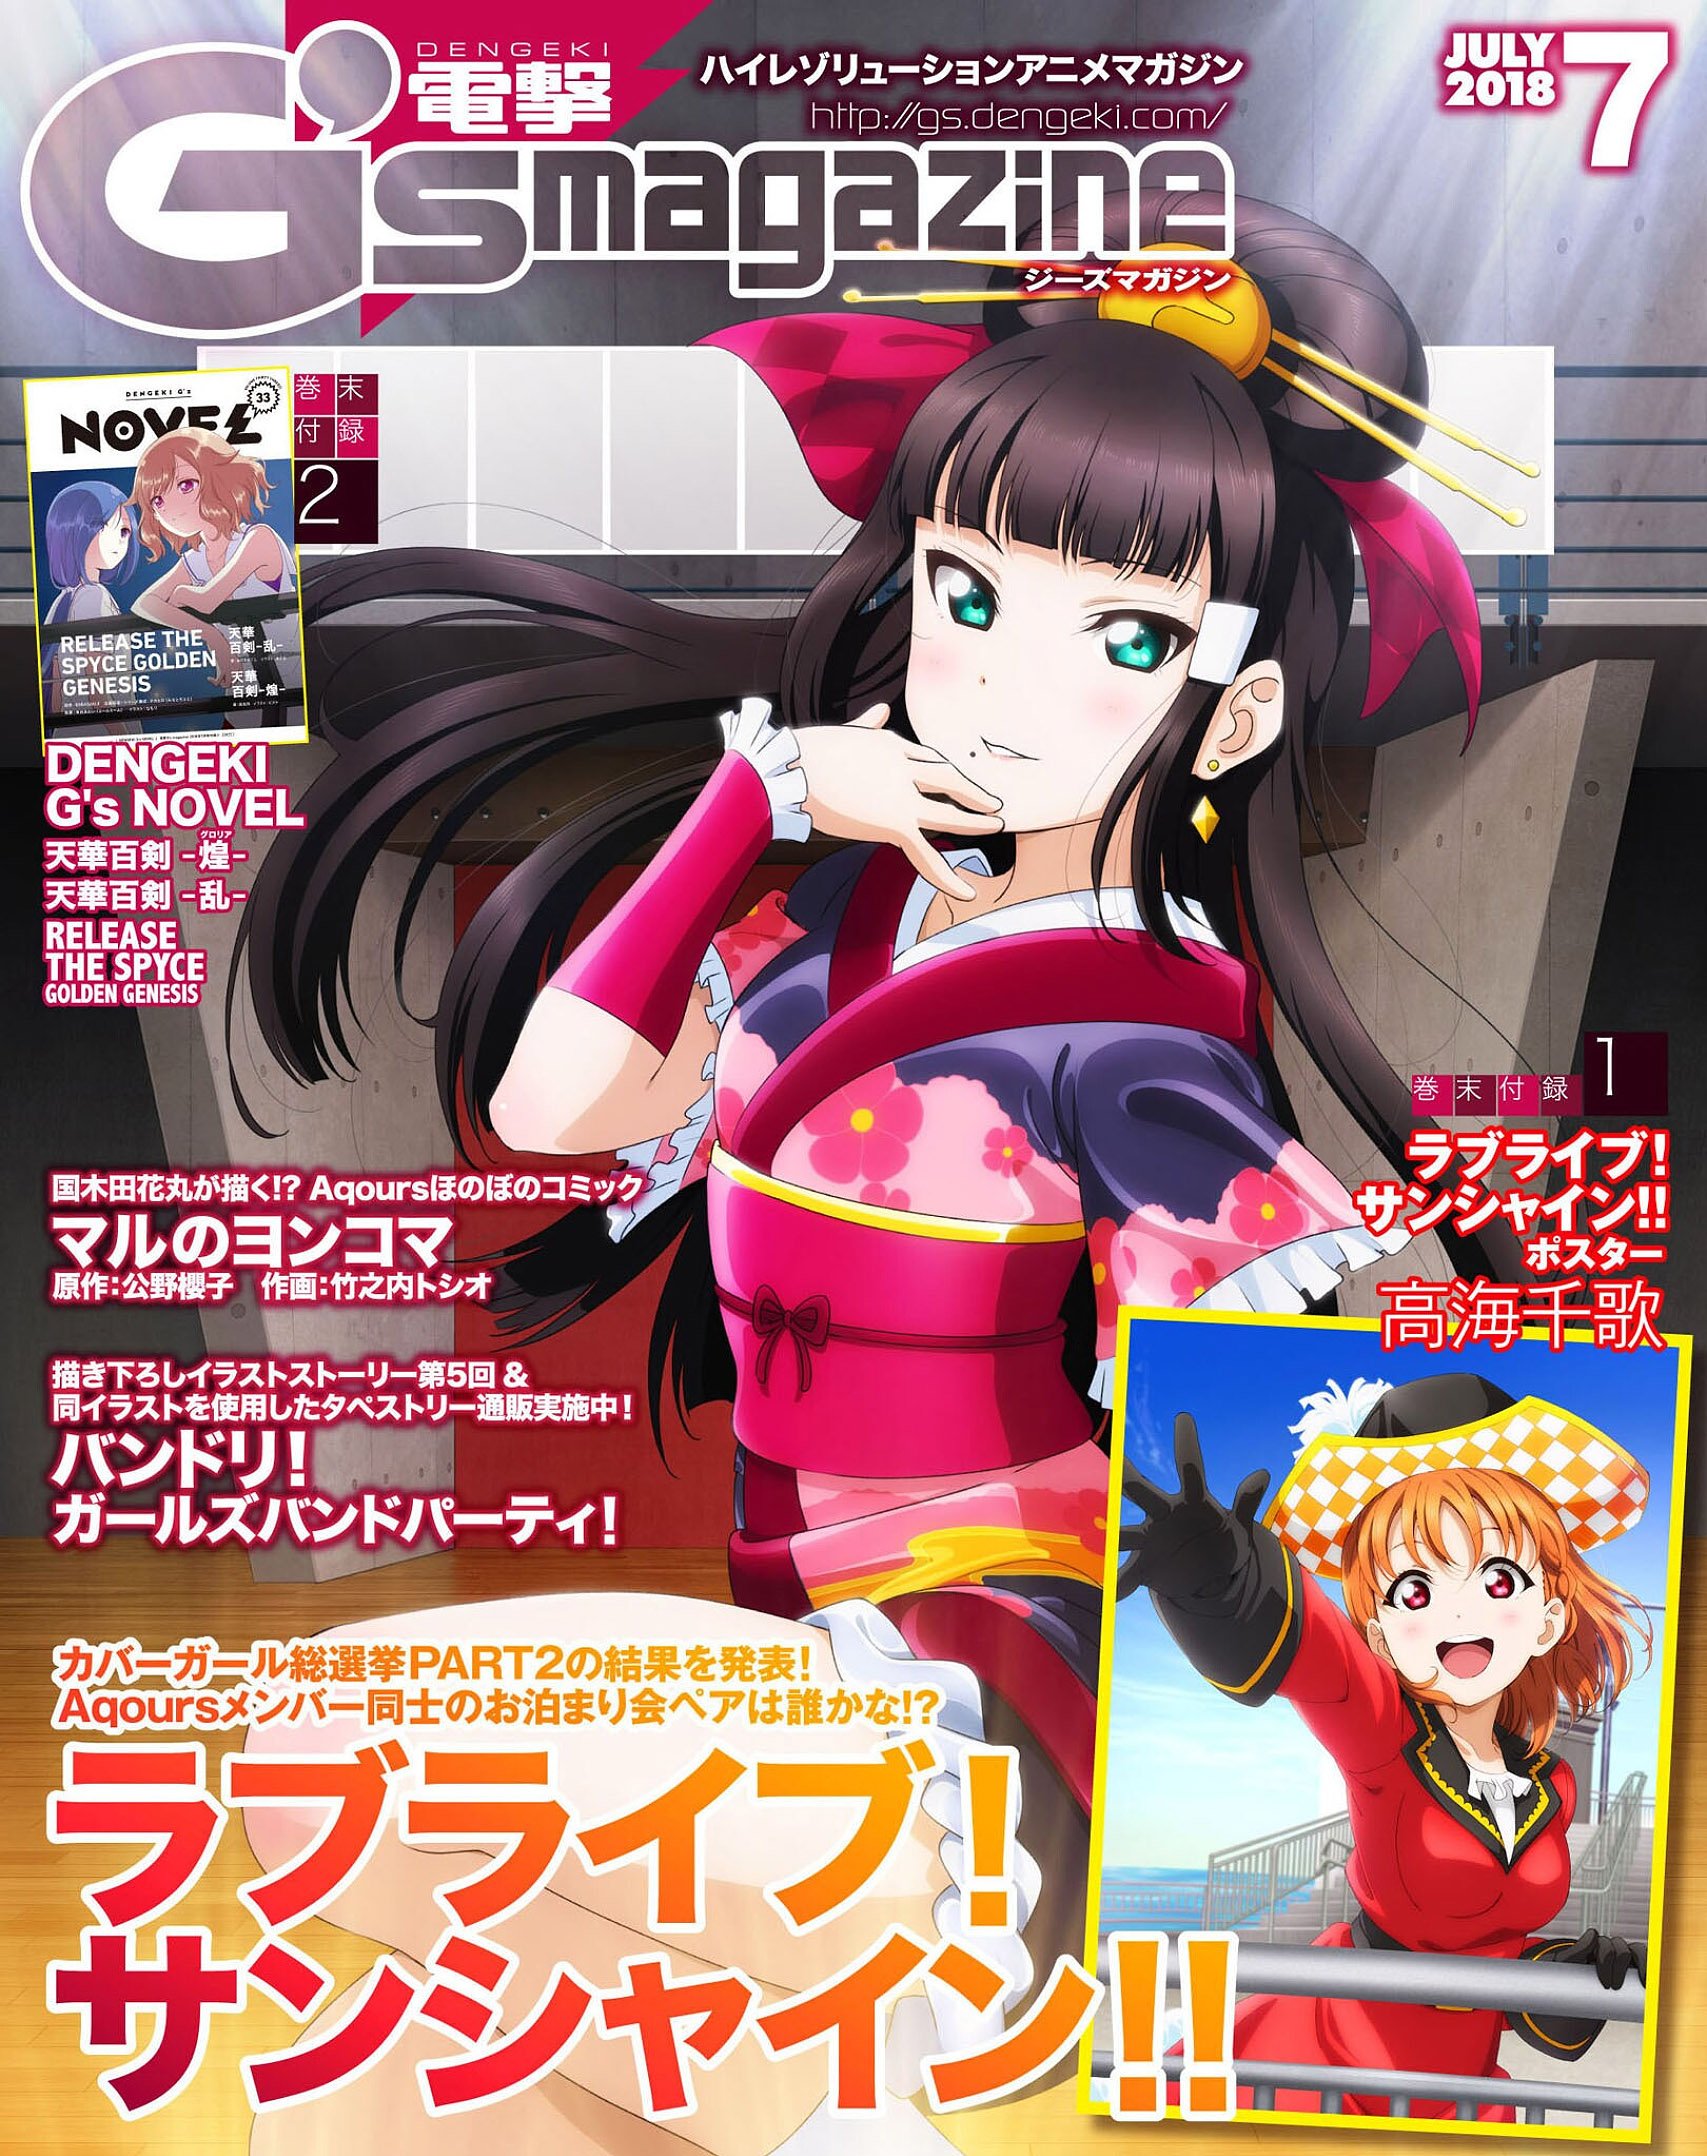 Dengeki G's Magazine Issue 252 (July 2018) (digital edition)